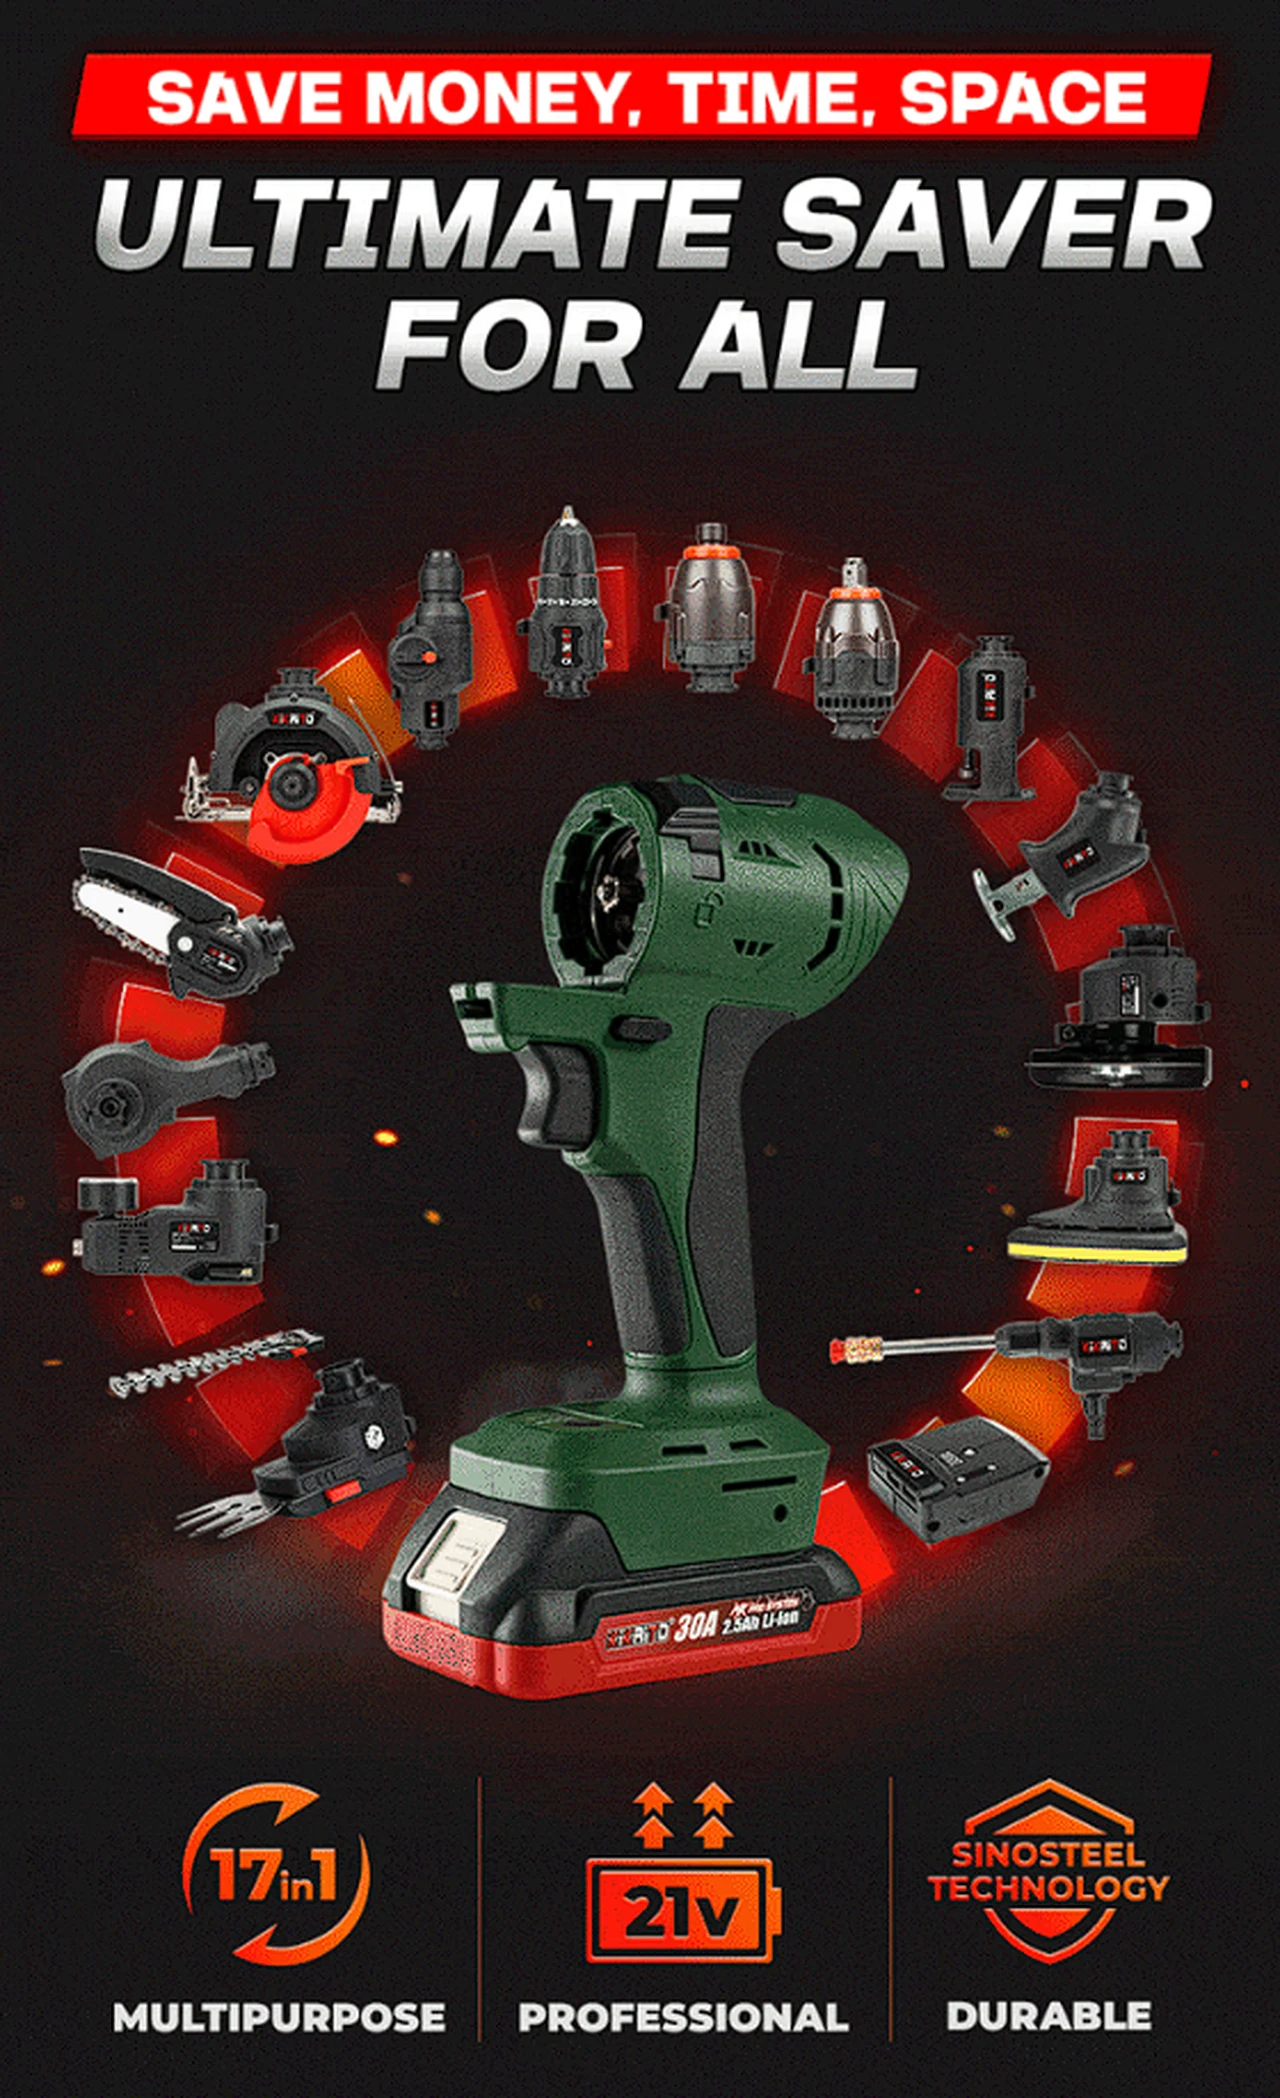 multipurpose power tool kit